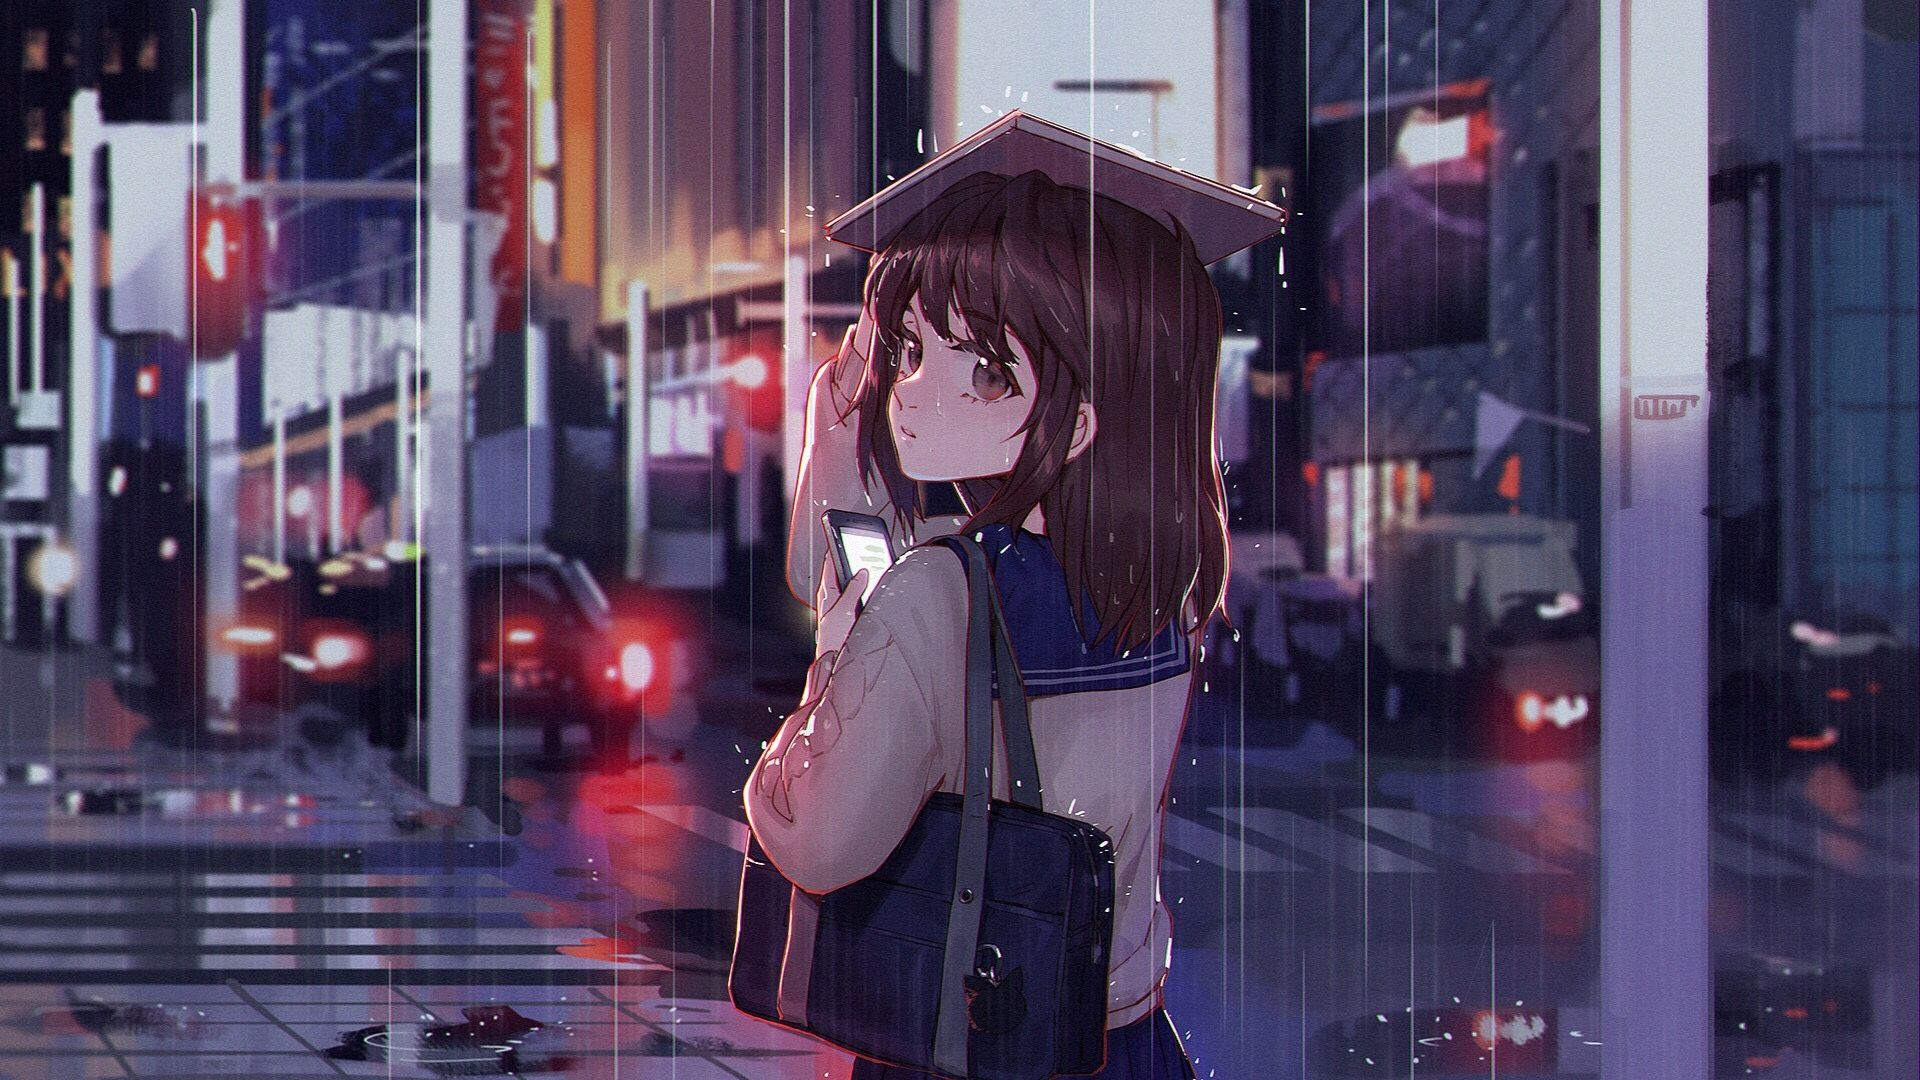 Download 1920x1080 Anime Girl, Raining, Smartphone, Urban, Street, Brown Hair Wallpaper for Widescreen